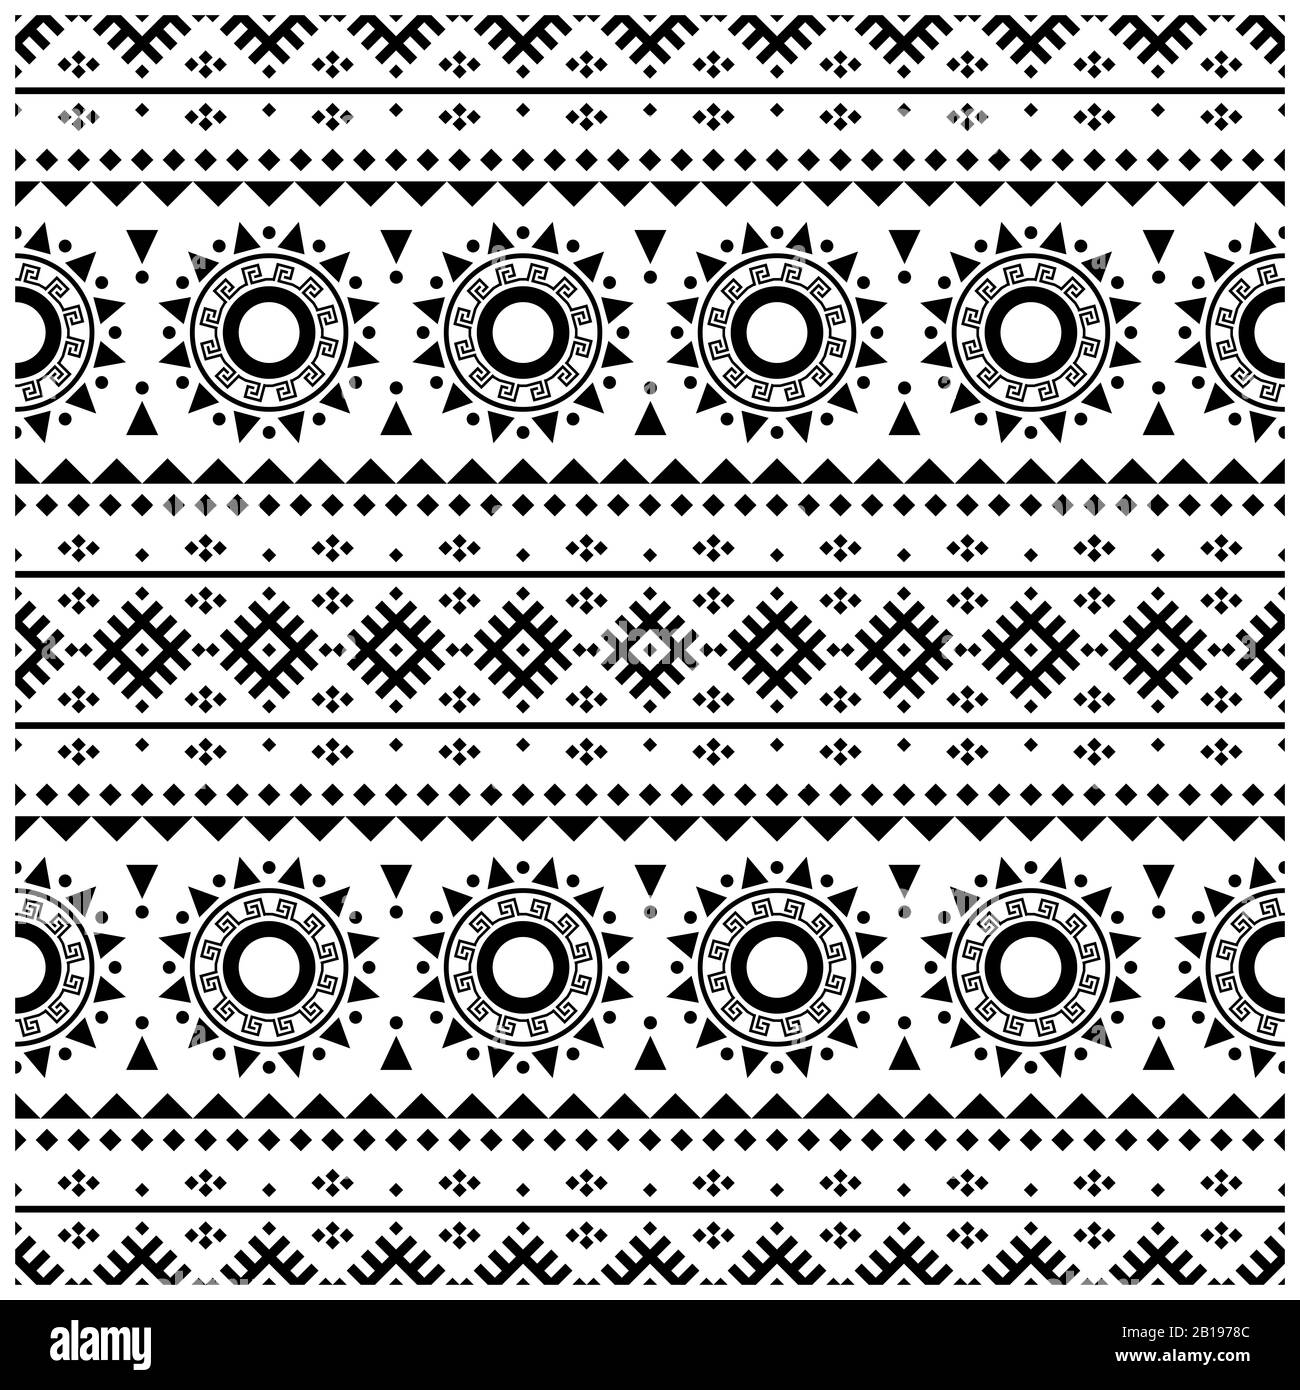 Ikat Aztec ethnic design. Native Seamless pattern ethnic tile vector illustration. Mexican style Stock Photo